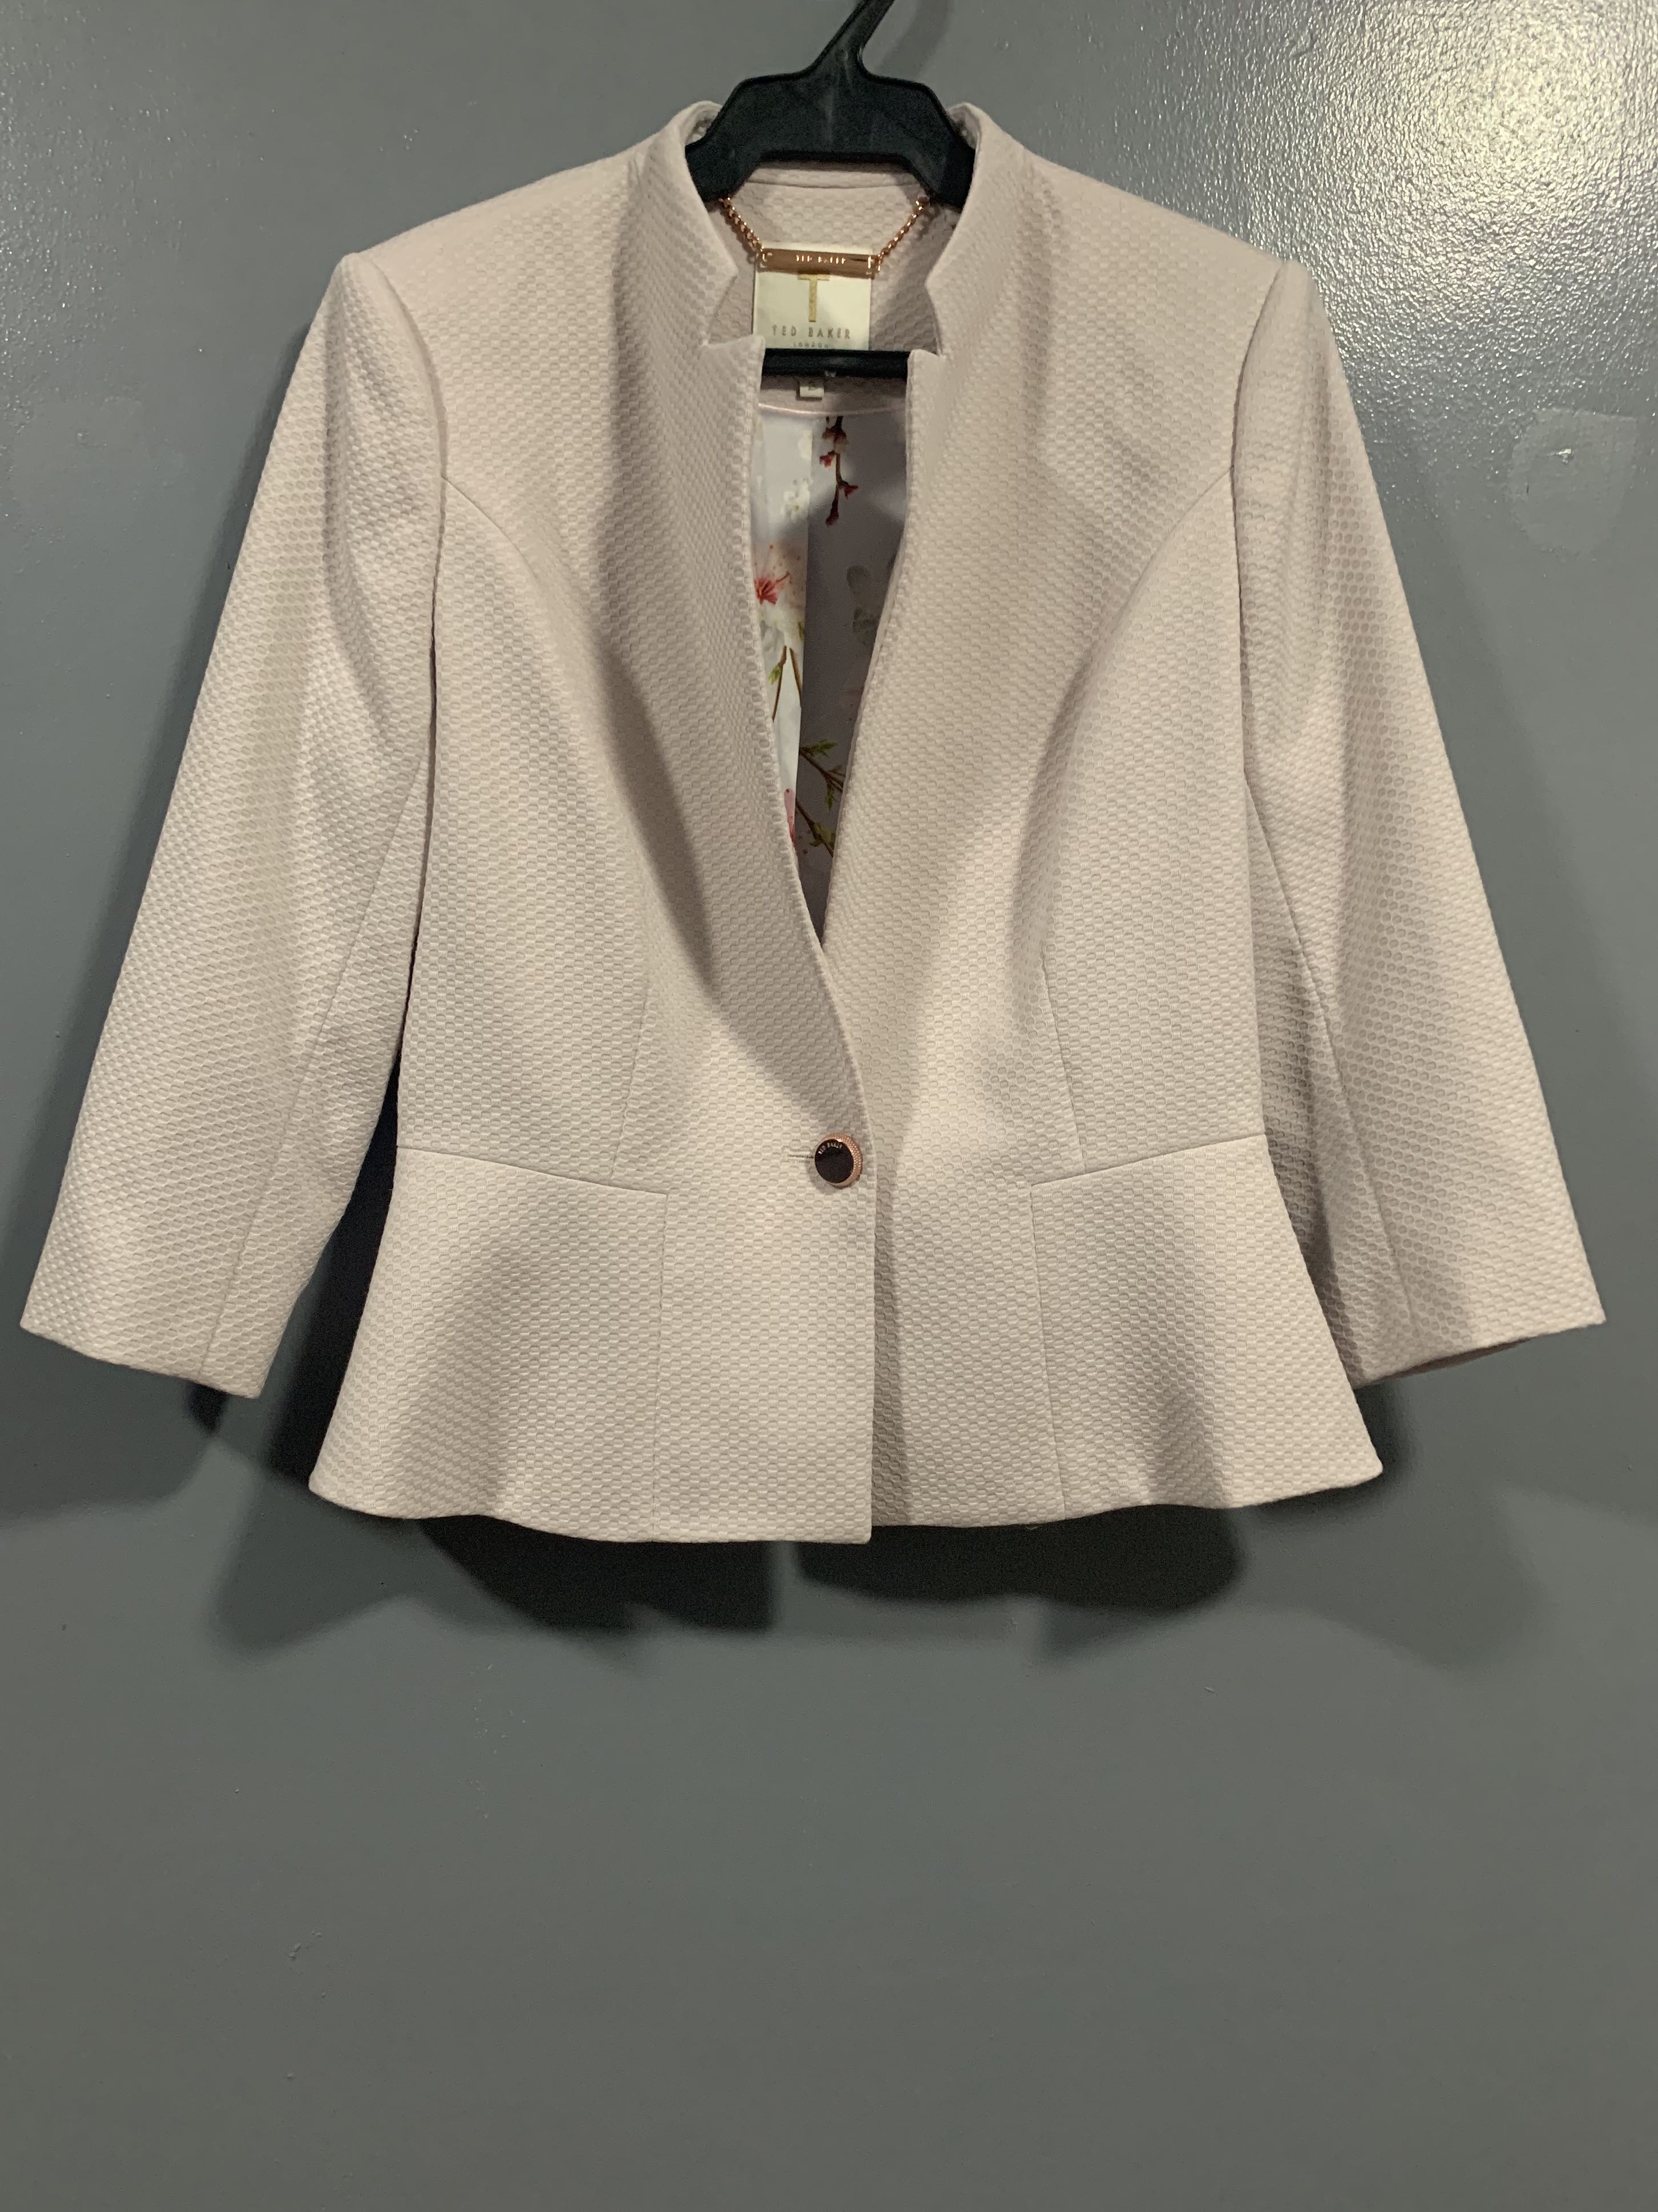 TED BAKER Structured Blazer in Blush, Women's Fashion, Coats, Jackets ...